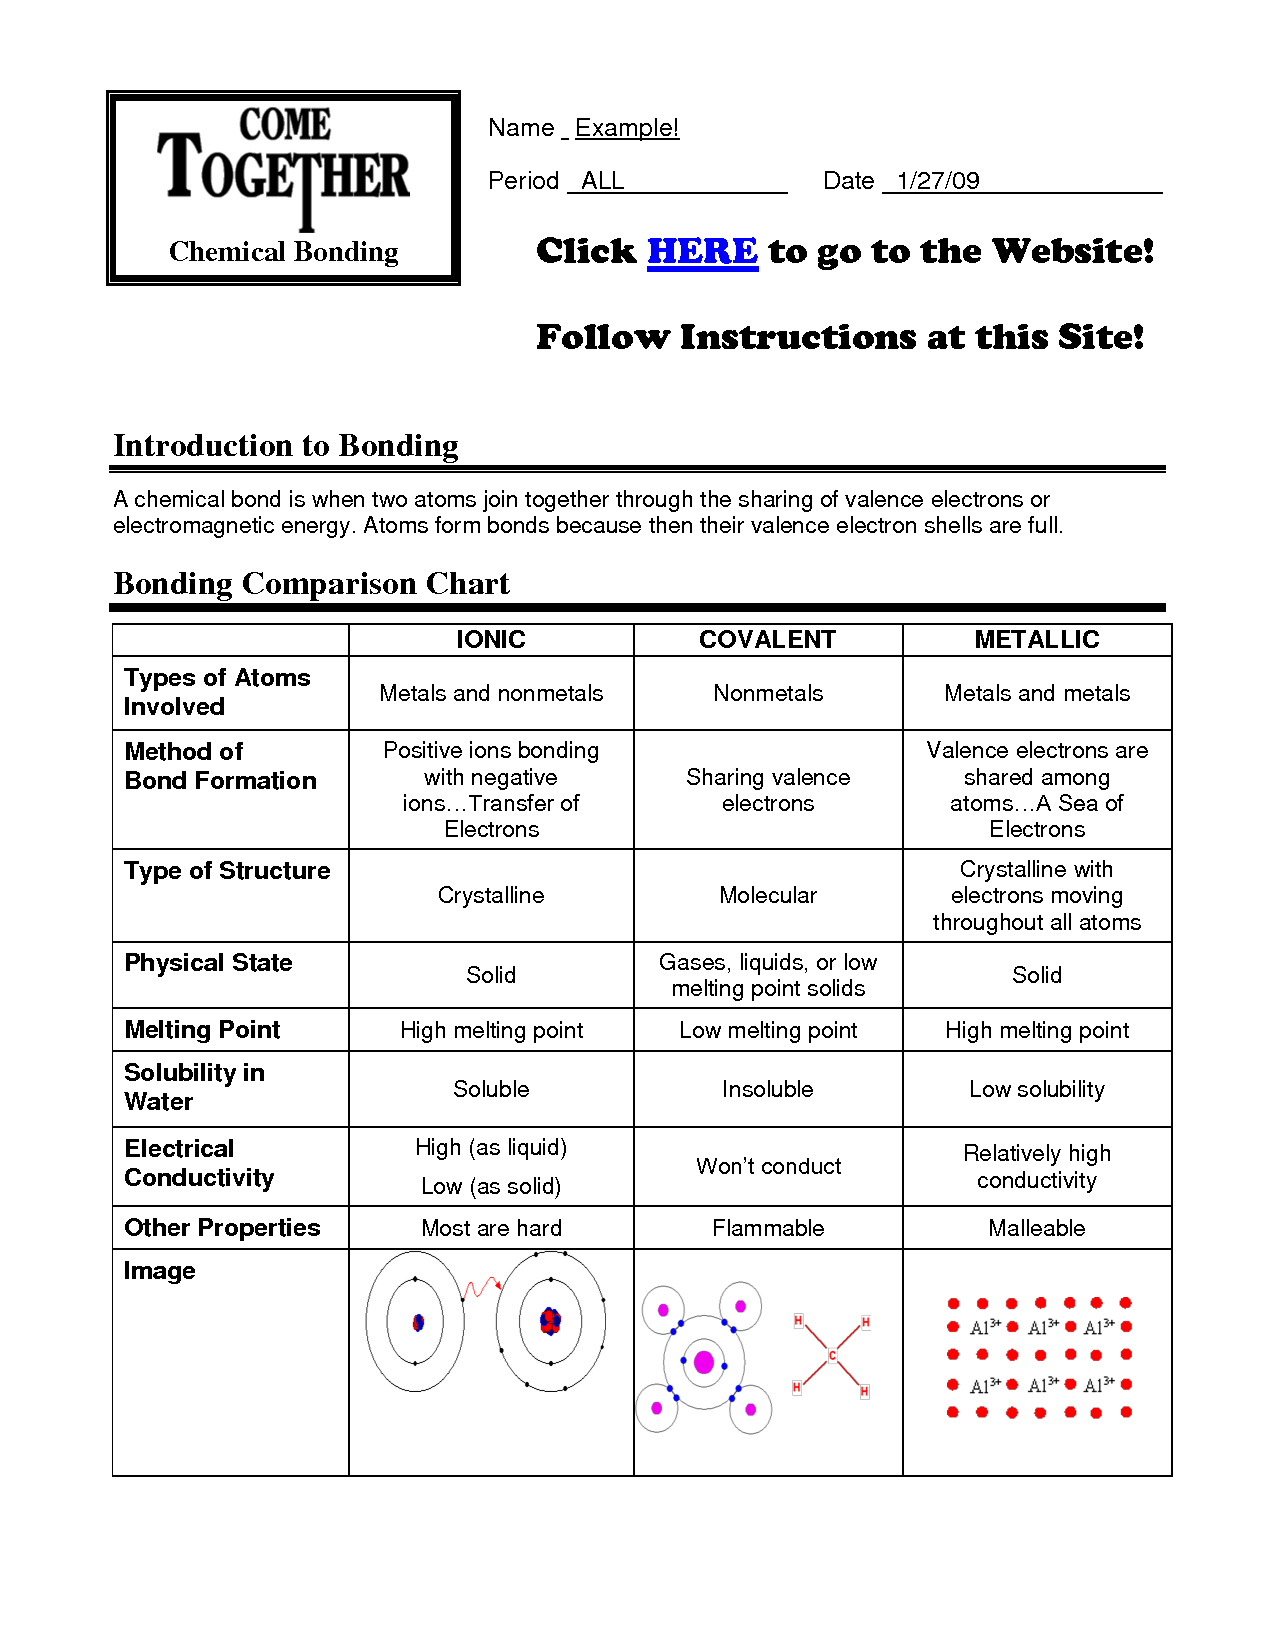 More Chemical Bonding Worksheet Answers Regarding Chemical Bonding Worksheet Answers